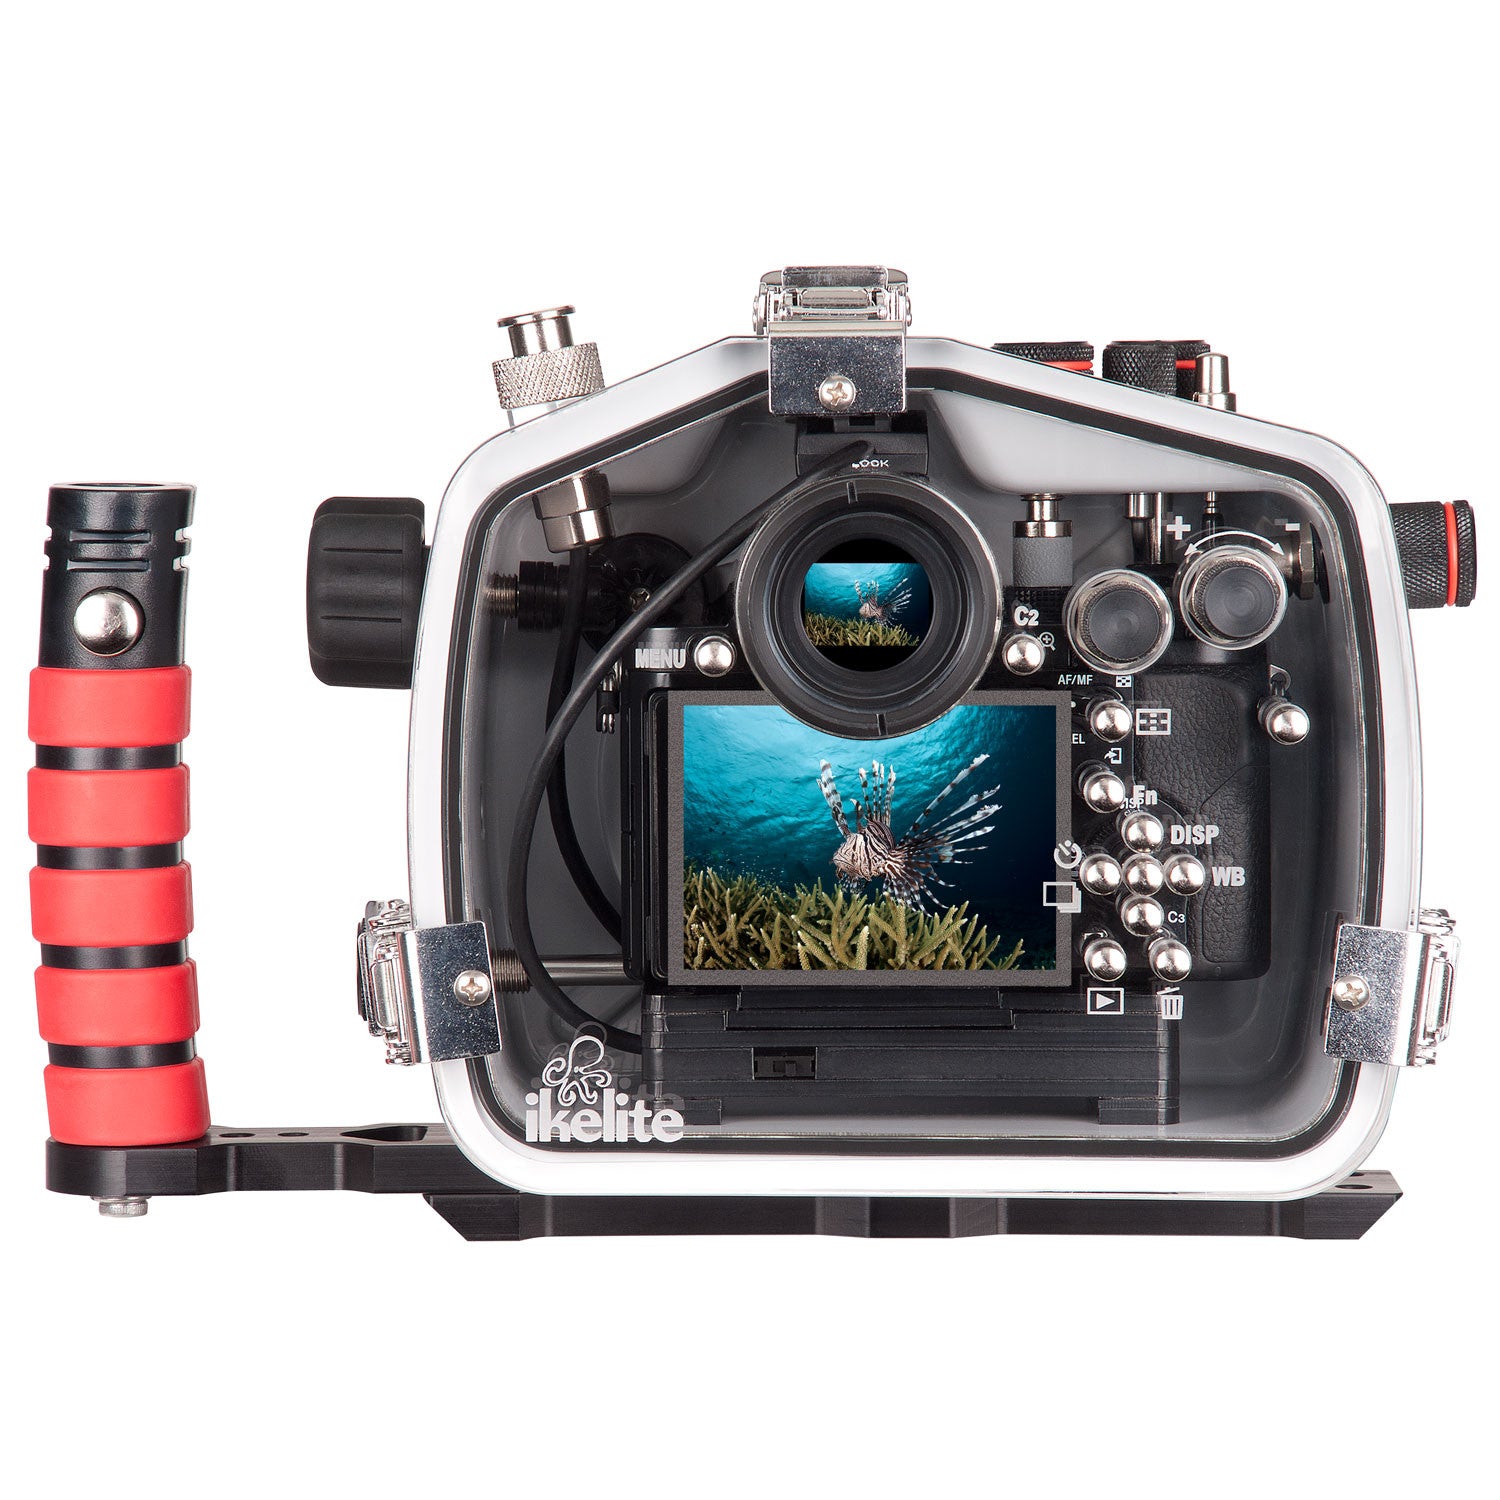 200FL Underwater TTL Housing for Sony Alpha a7, a7R, a7S Mirrorless Cameras